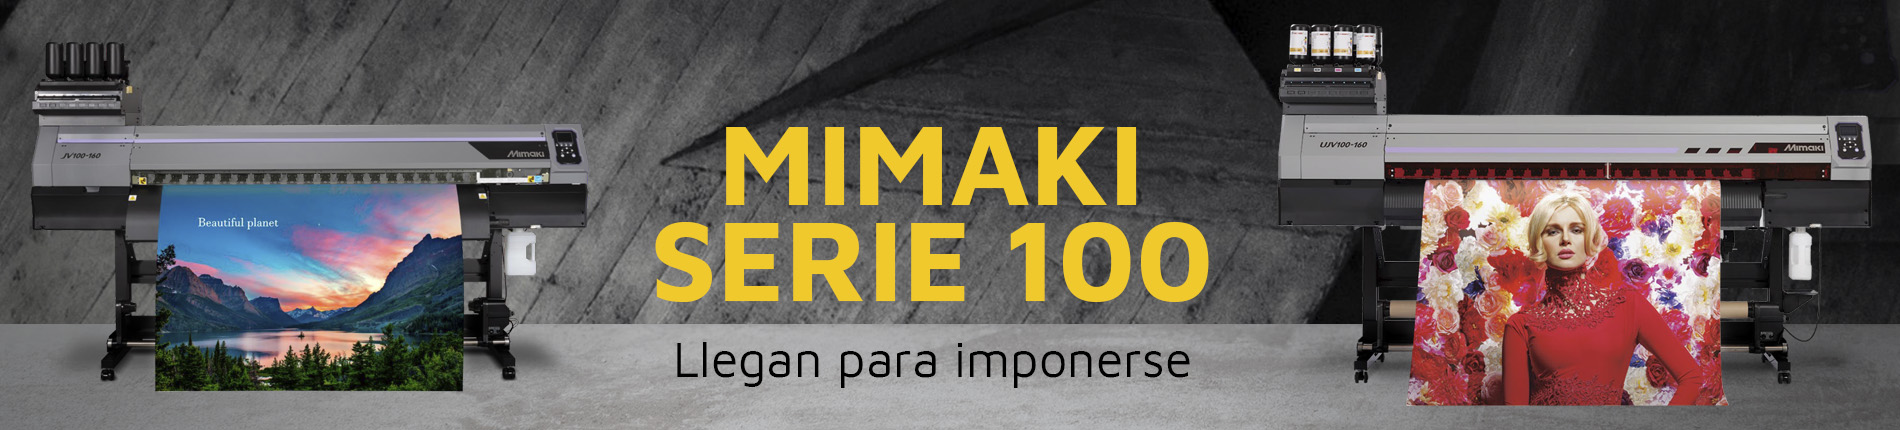 Mimaki Serie 100